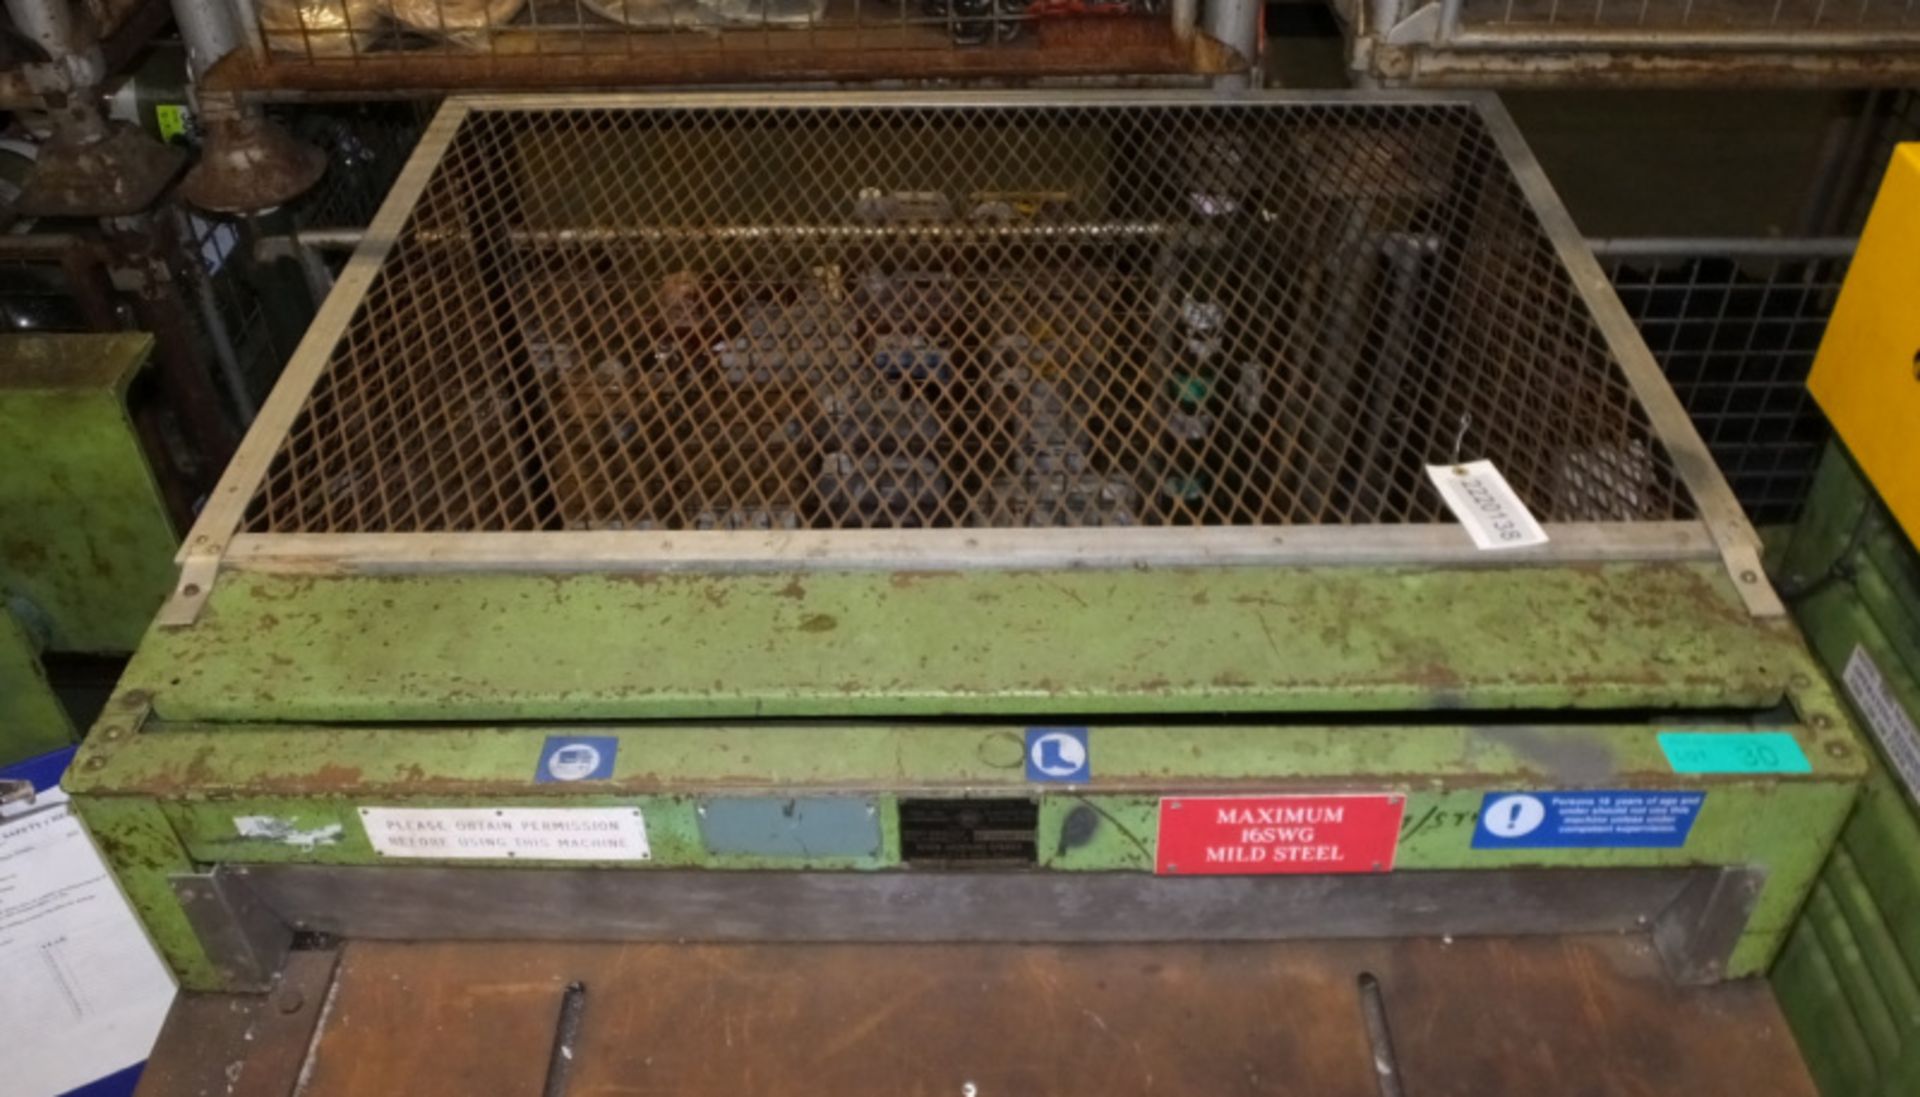 FJ Edwards Ltd manual guillotine - machine no 3780 ISS 2 - 88C 8747 - 3ft x 16G - Image 2 of 6